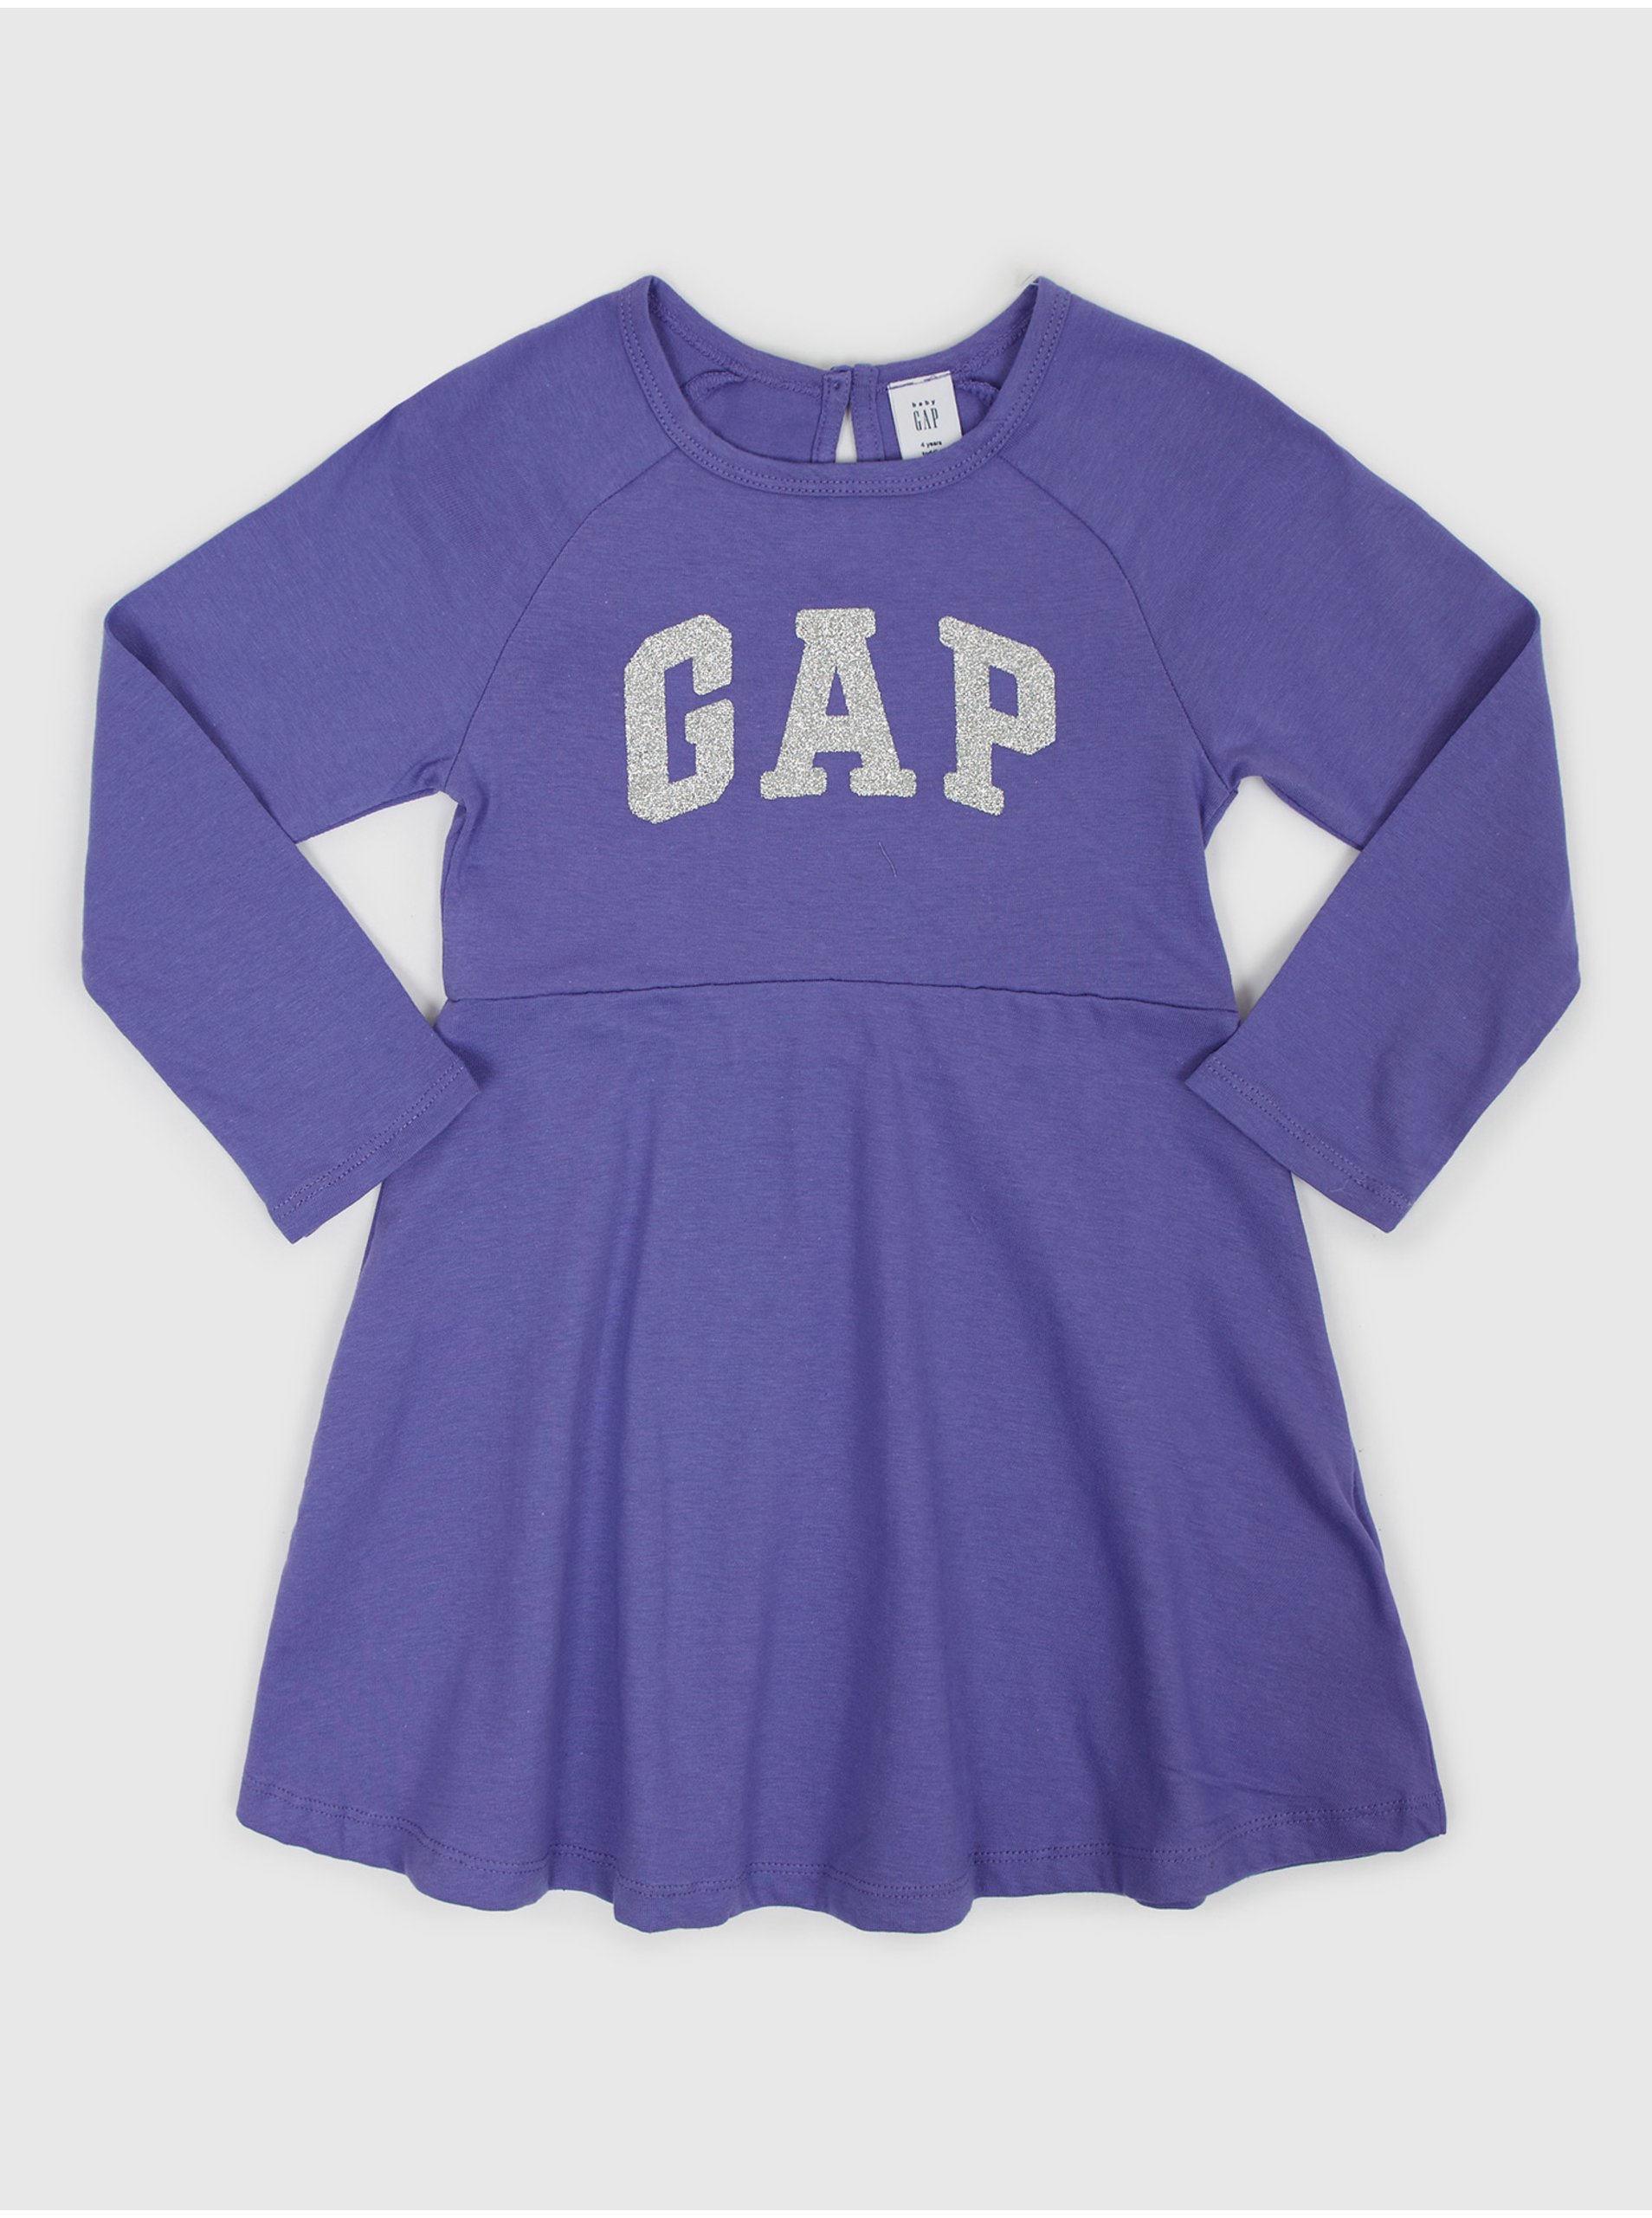 Lacno Fialové dievčenské šaty s logom GAP